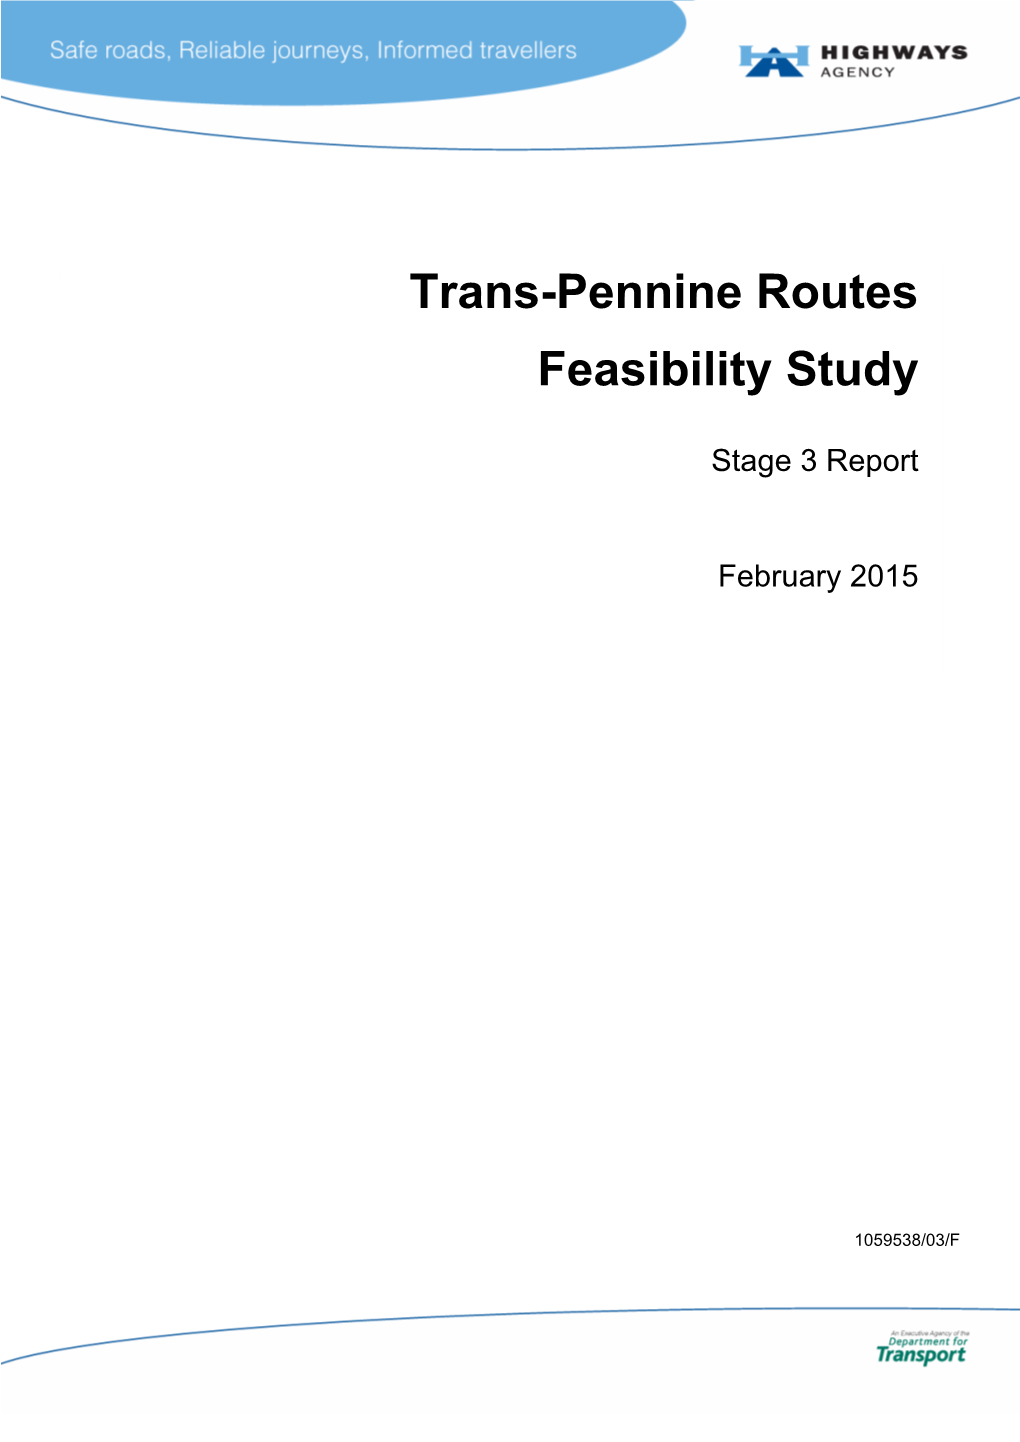 Trans-Pennine Route: Feasibility Study